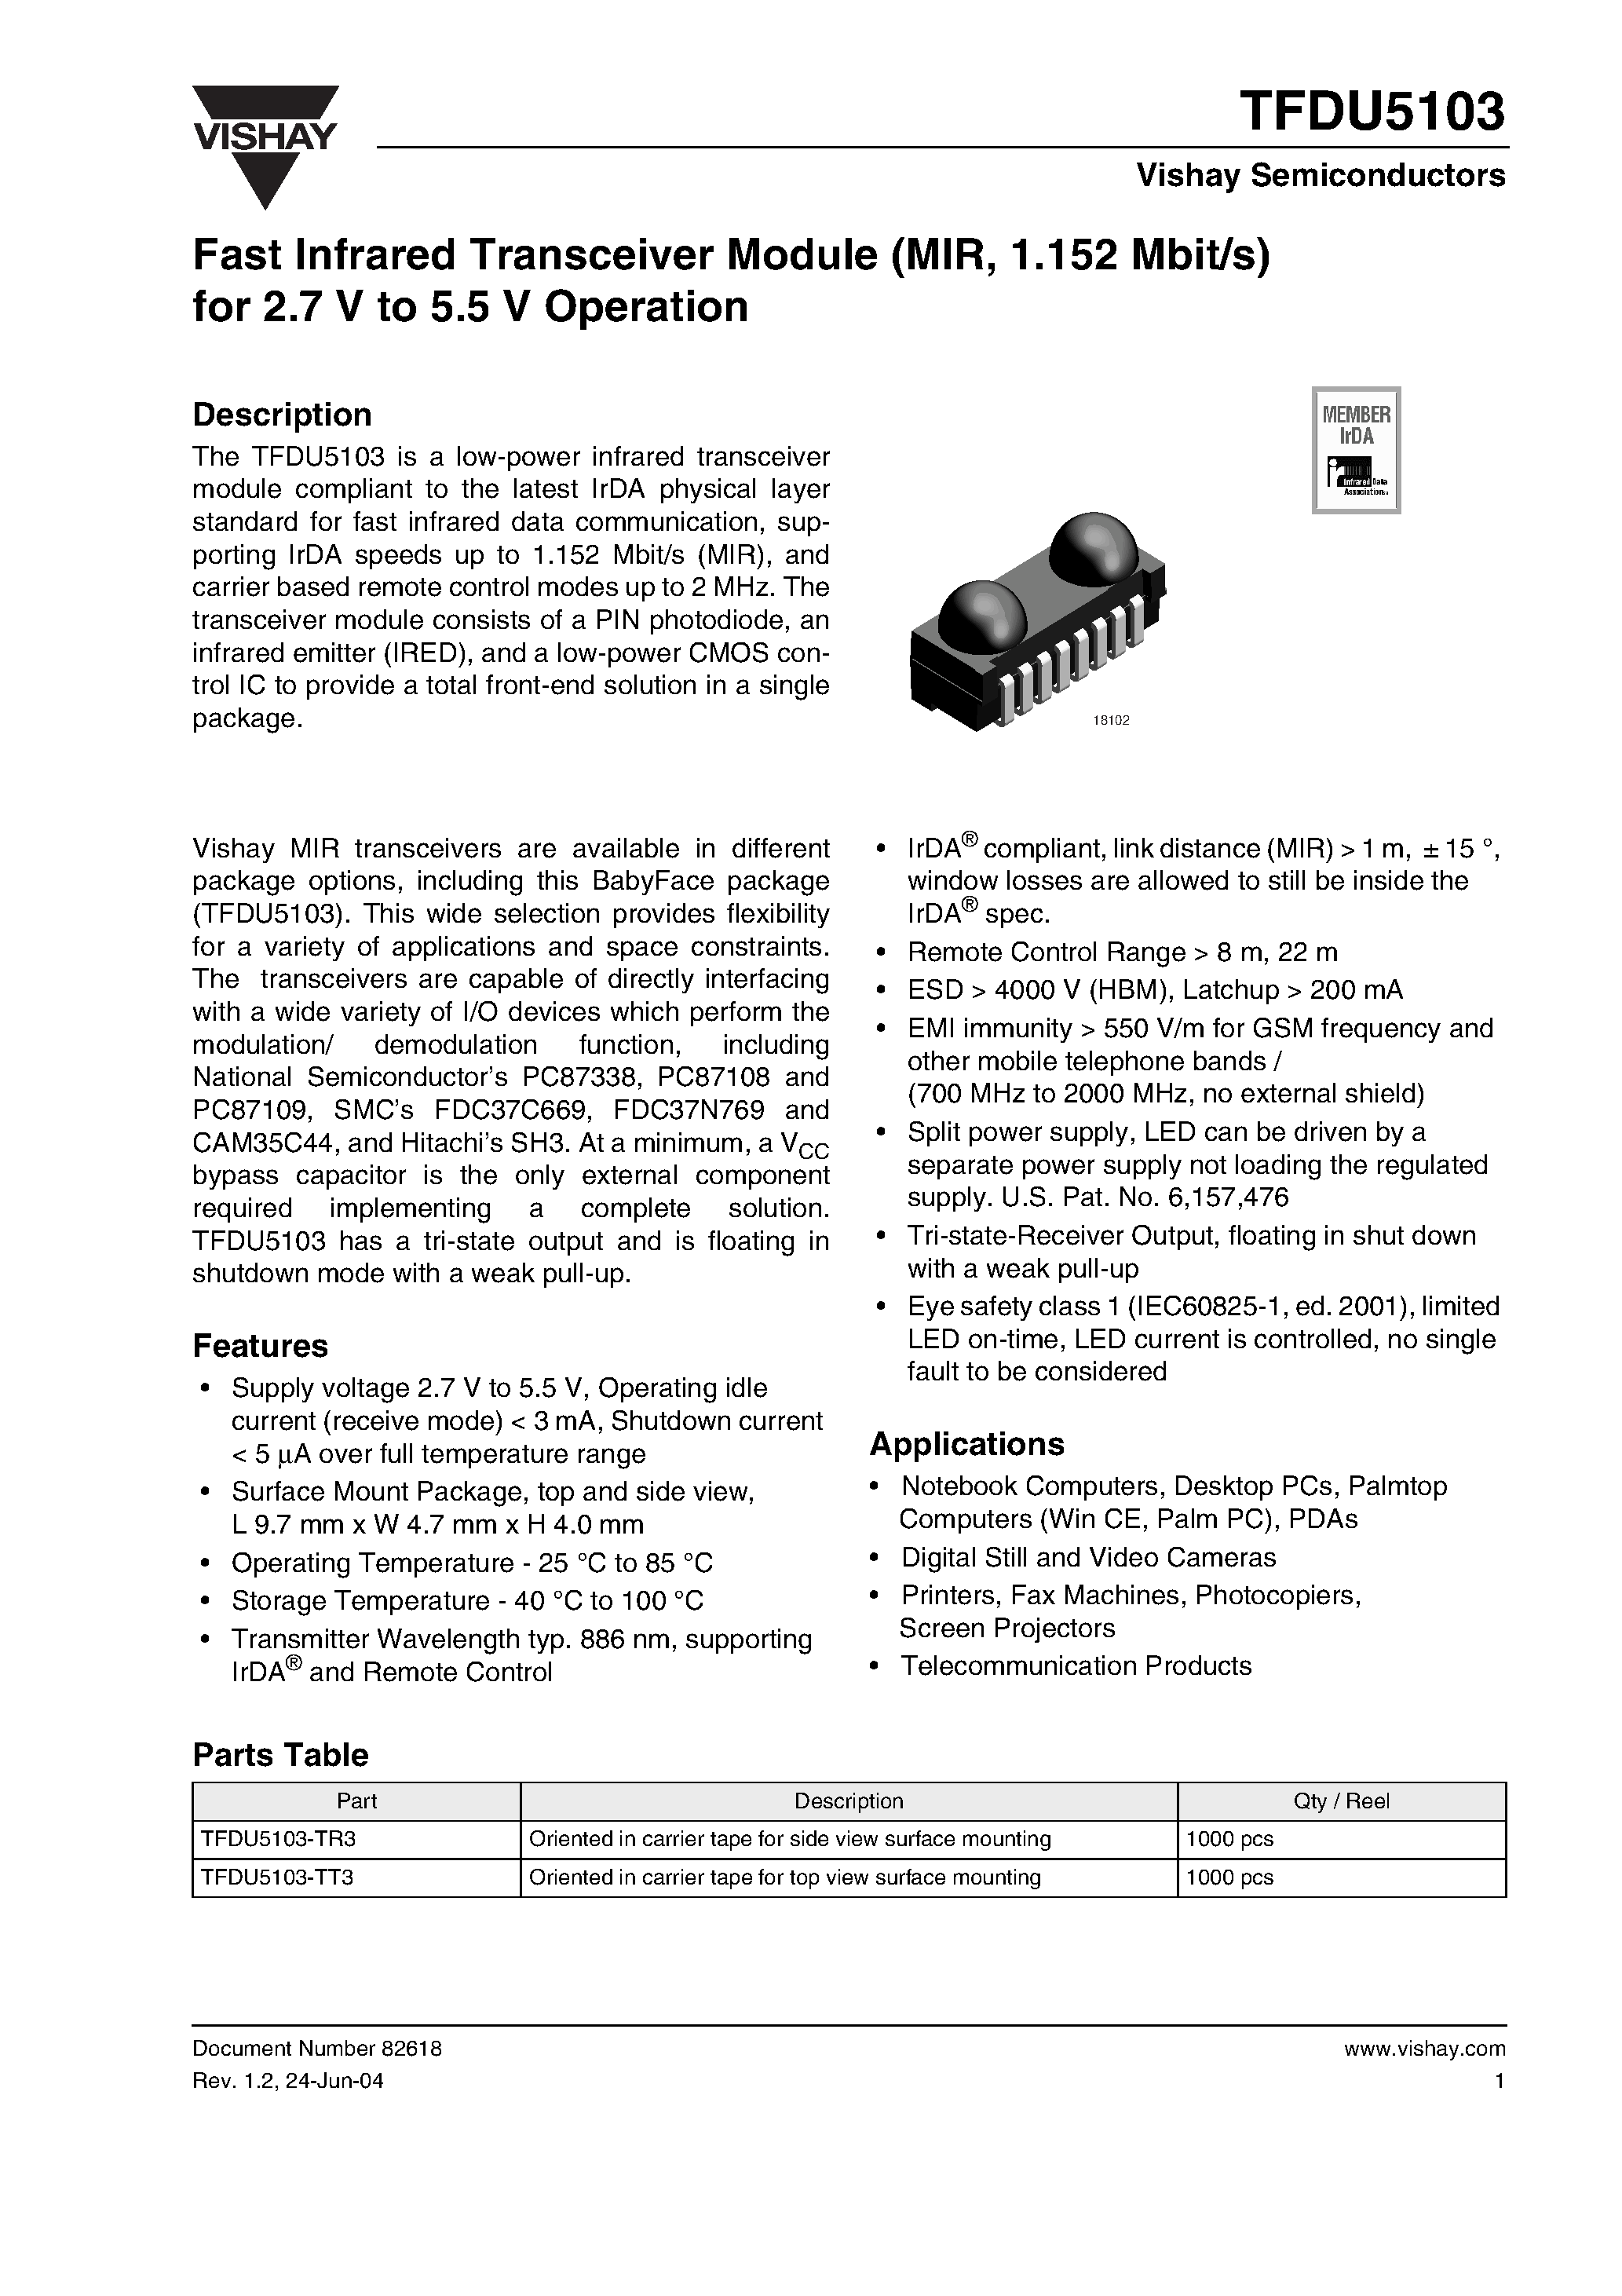 Datasheet TFDU5103-TT3 - Fast Infrared Transceiver Module (MIR/ 1.152 Mbit/s) for 2.7 V to 5.5 V Operation page 1